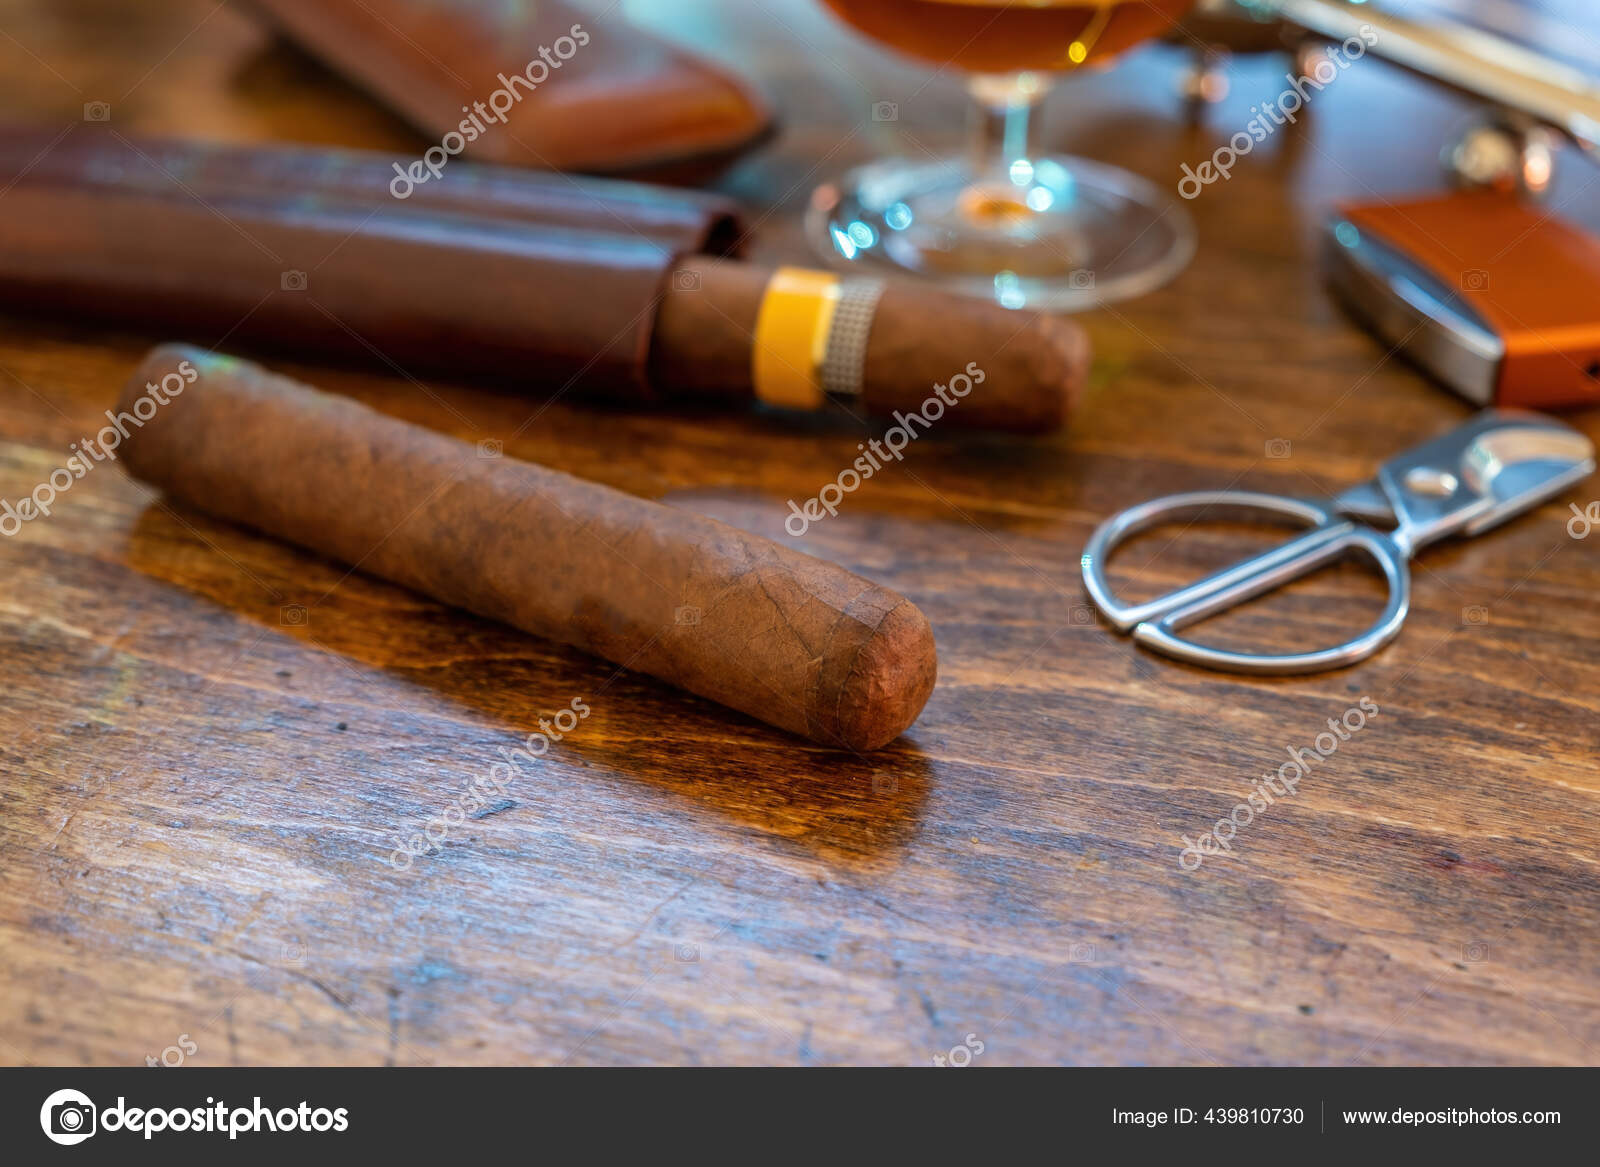 Order Cigar Lifestyle Accessories